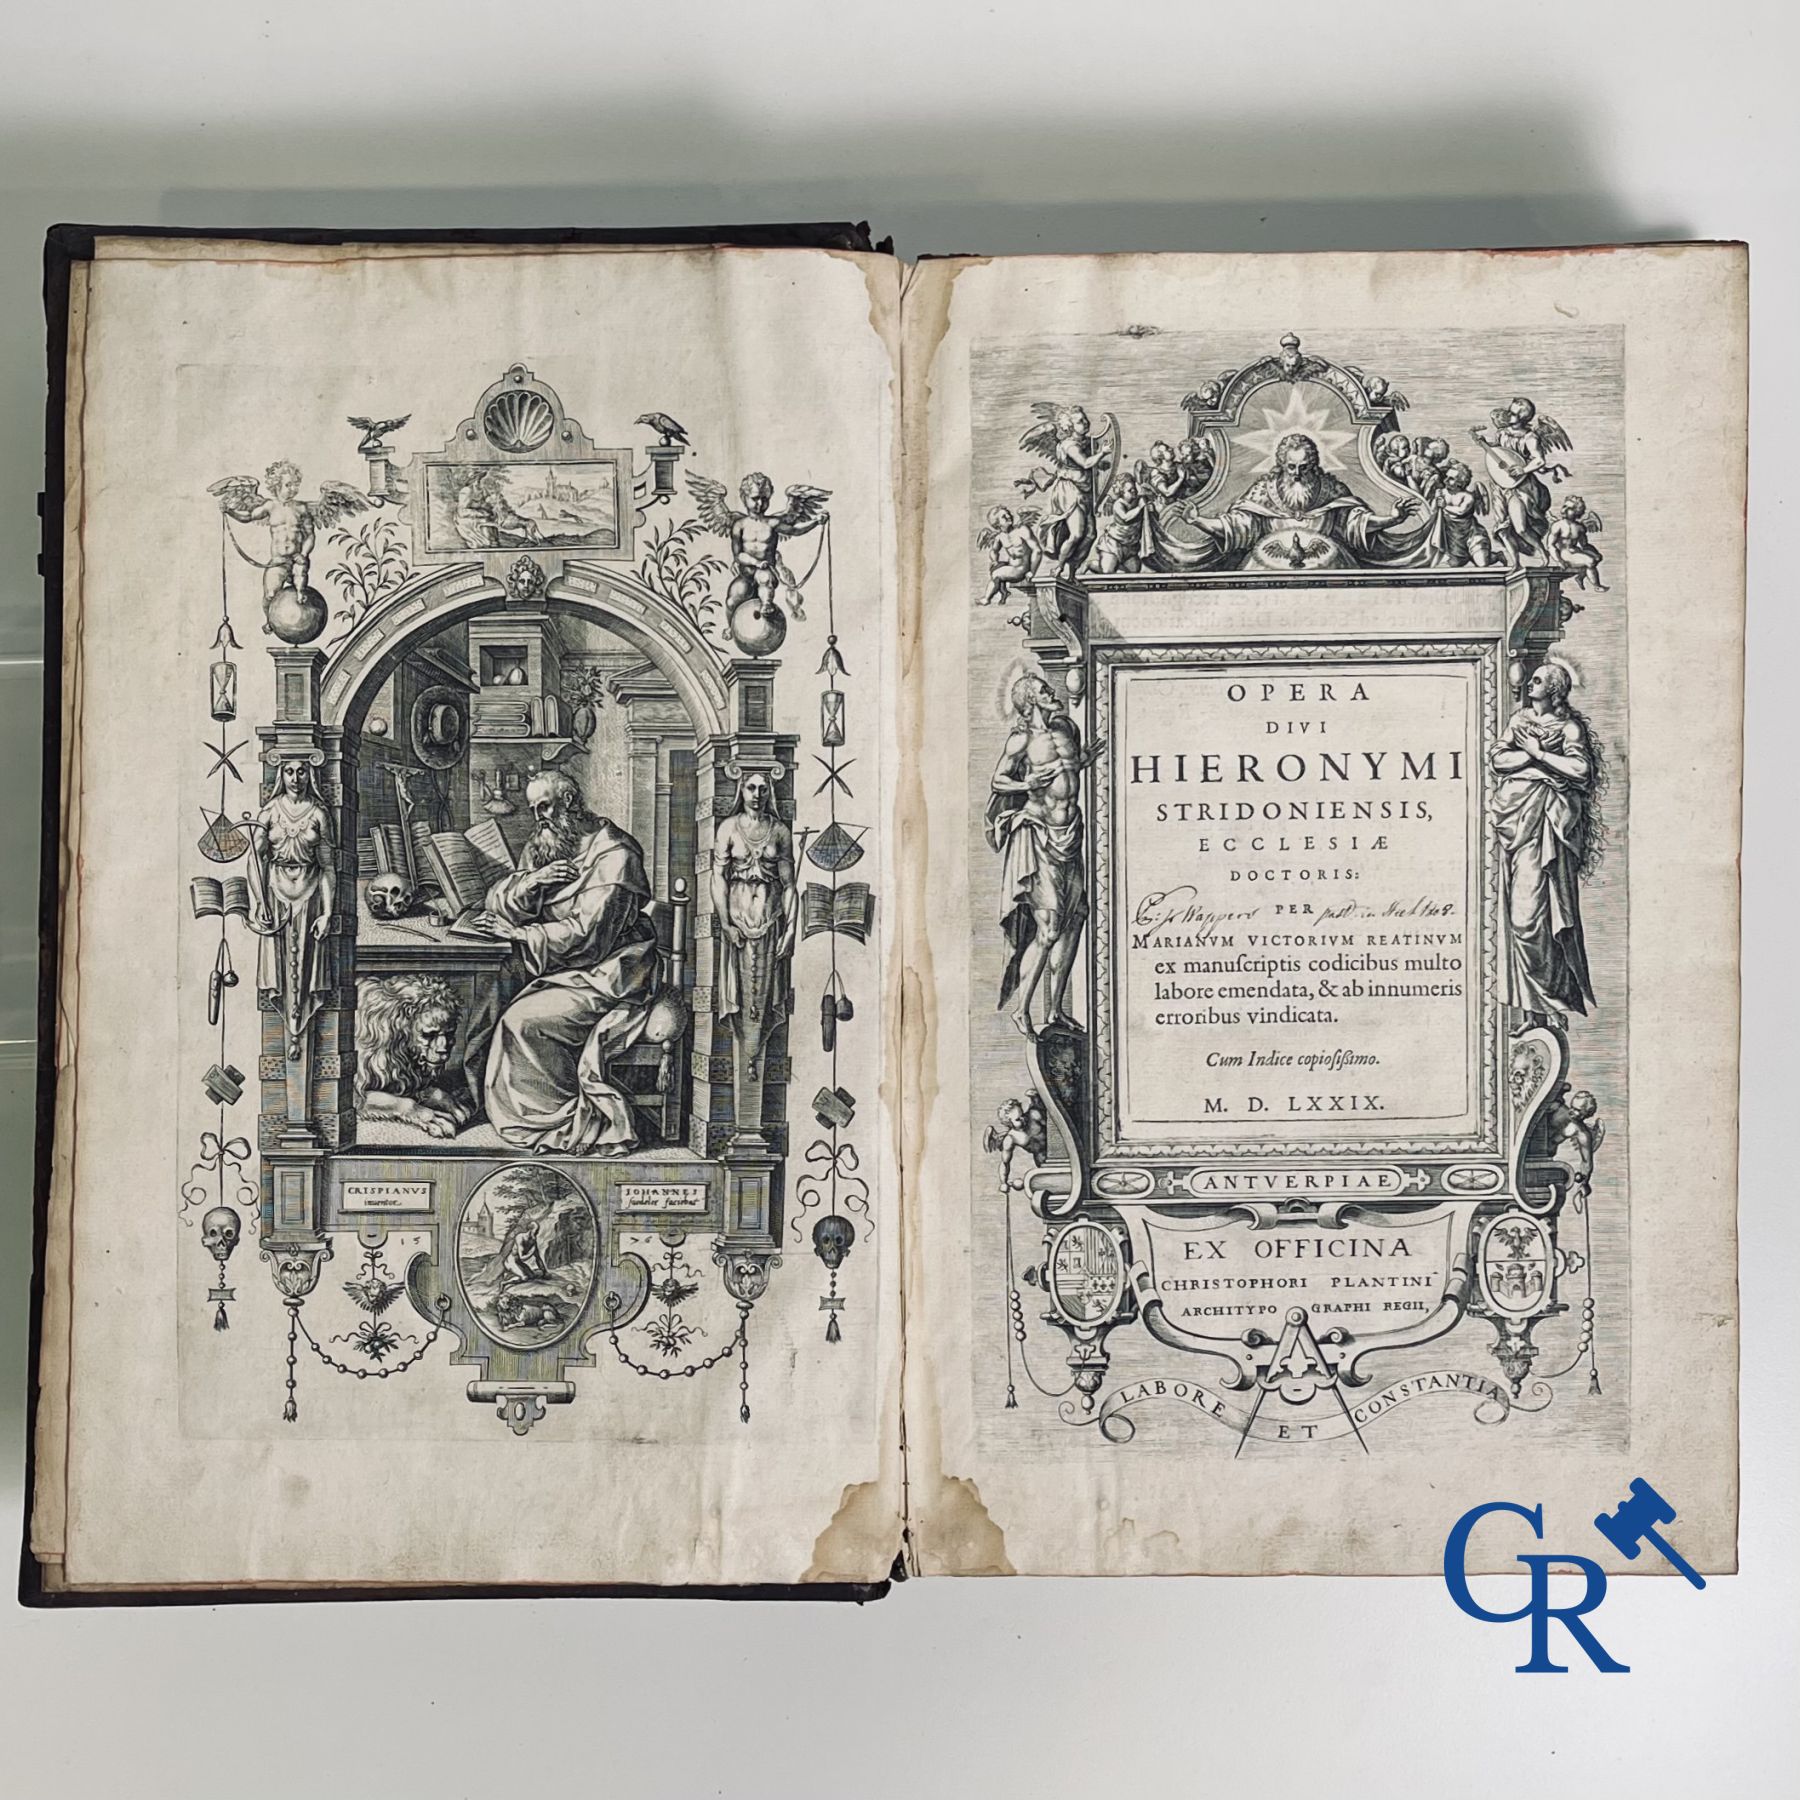 Early printed books: Les oeuvres de Saint Jerome, Mariani Victorij Reatini. Atelier Plantijn (1578-1